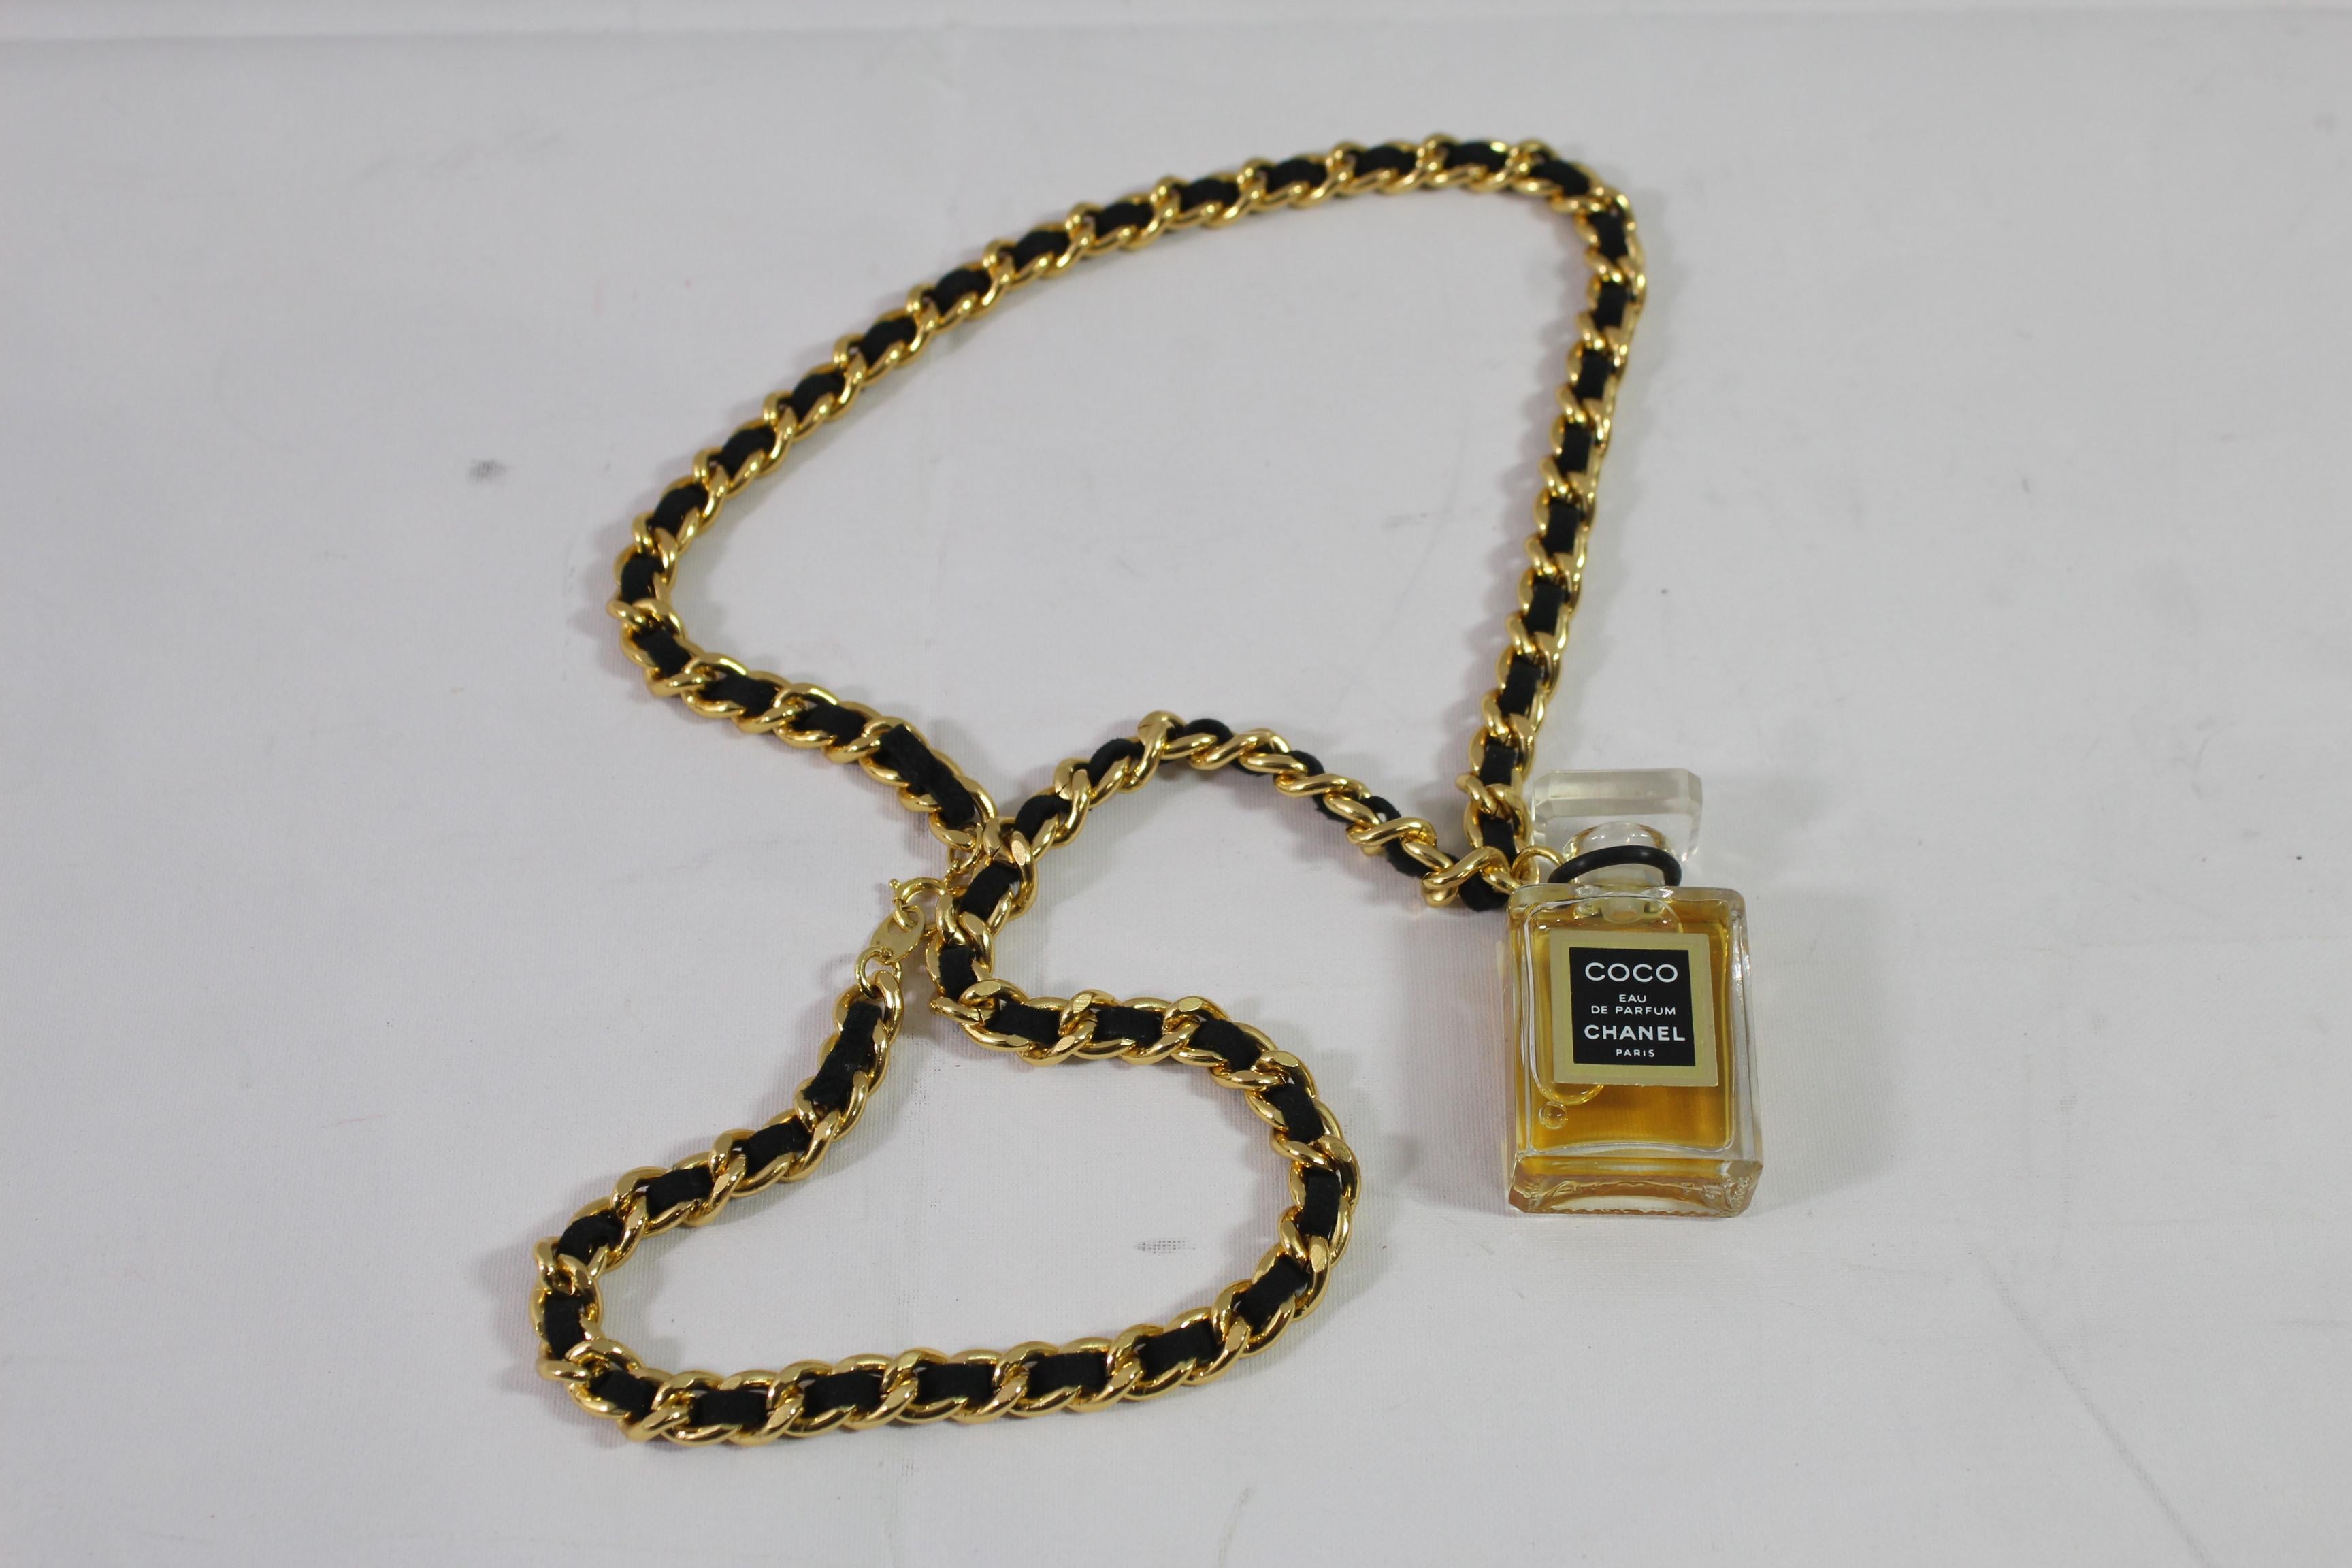 Women's or Men's Chanel Vintage Necklace with Chanel parfum Bottle. 